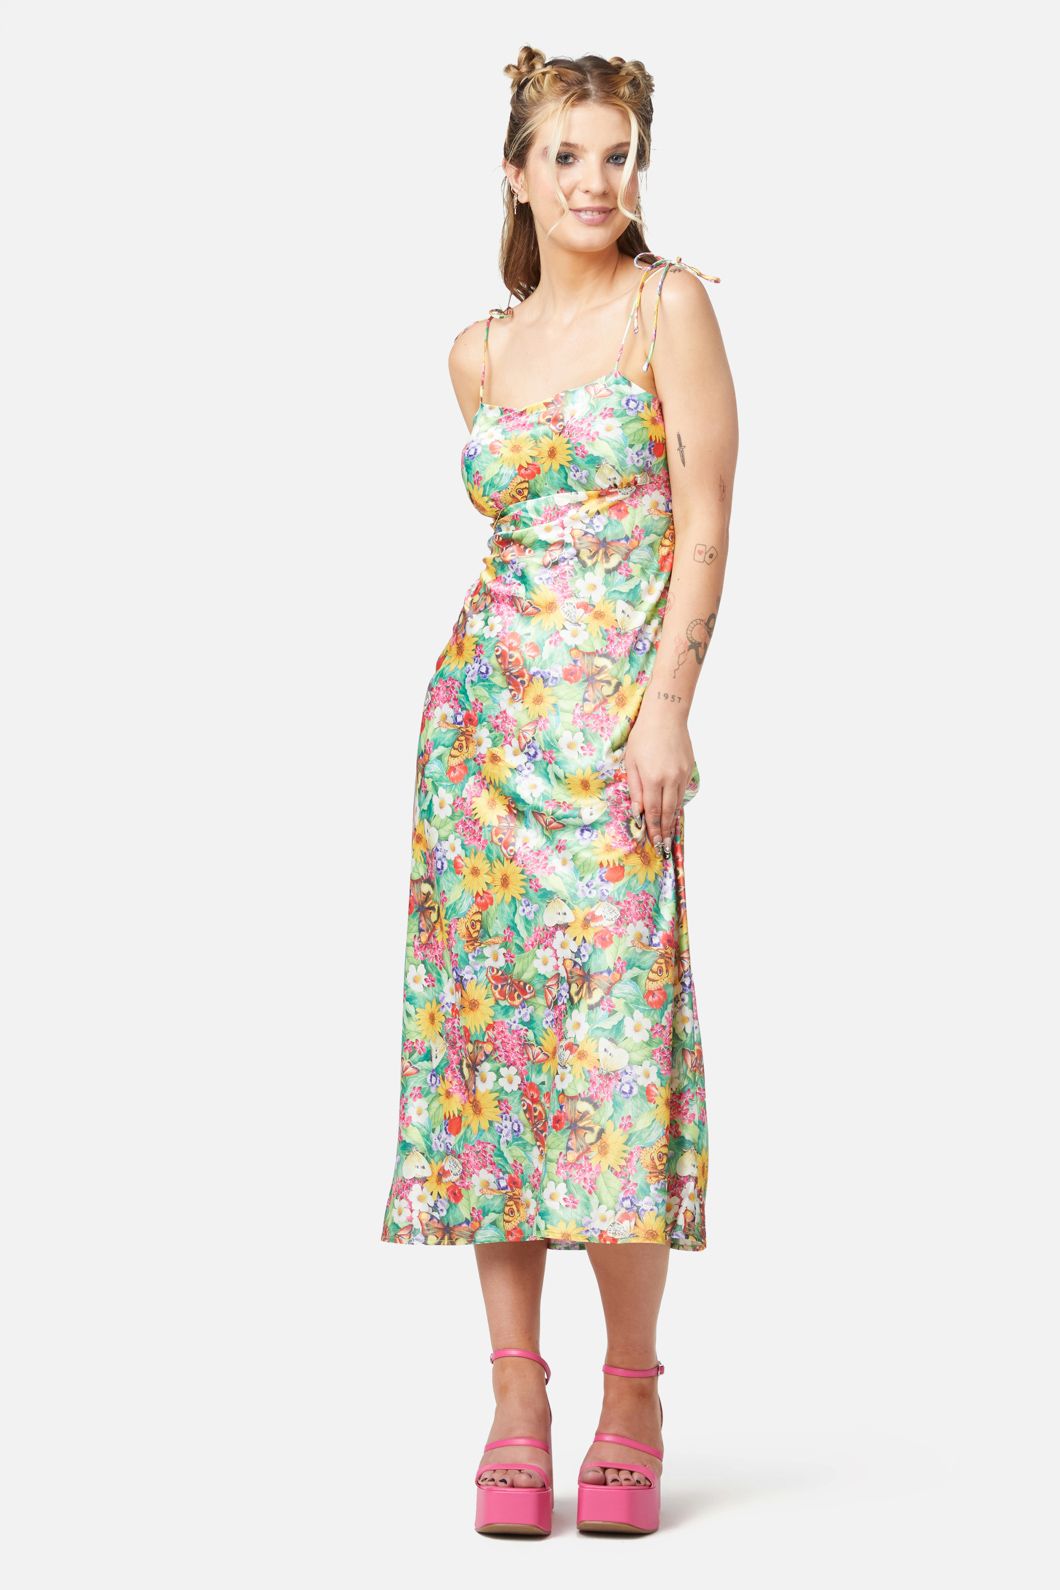 This $59 Zara Pink Satin Slip Dress Has TikTok In A Spin, But Is It In  Australia?